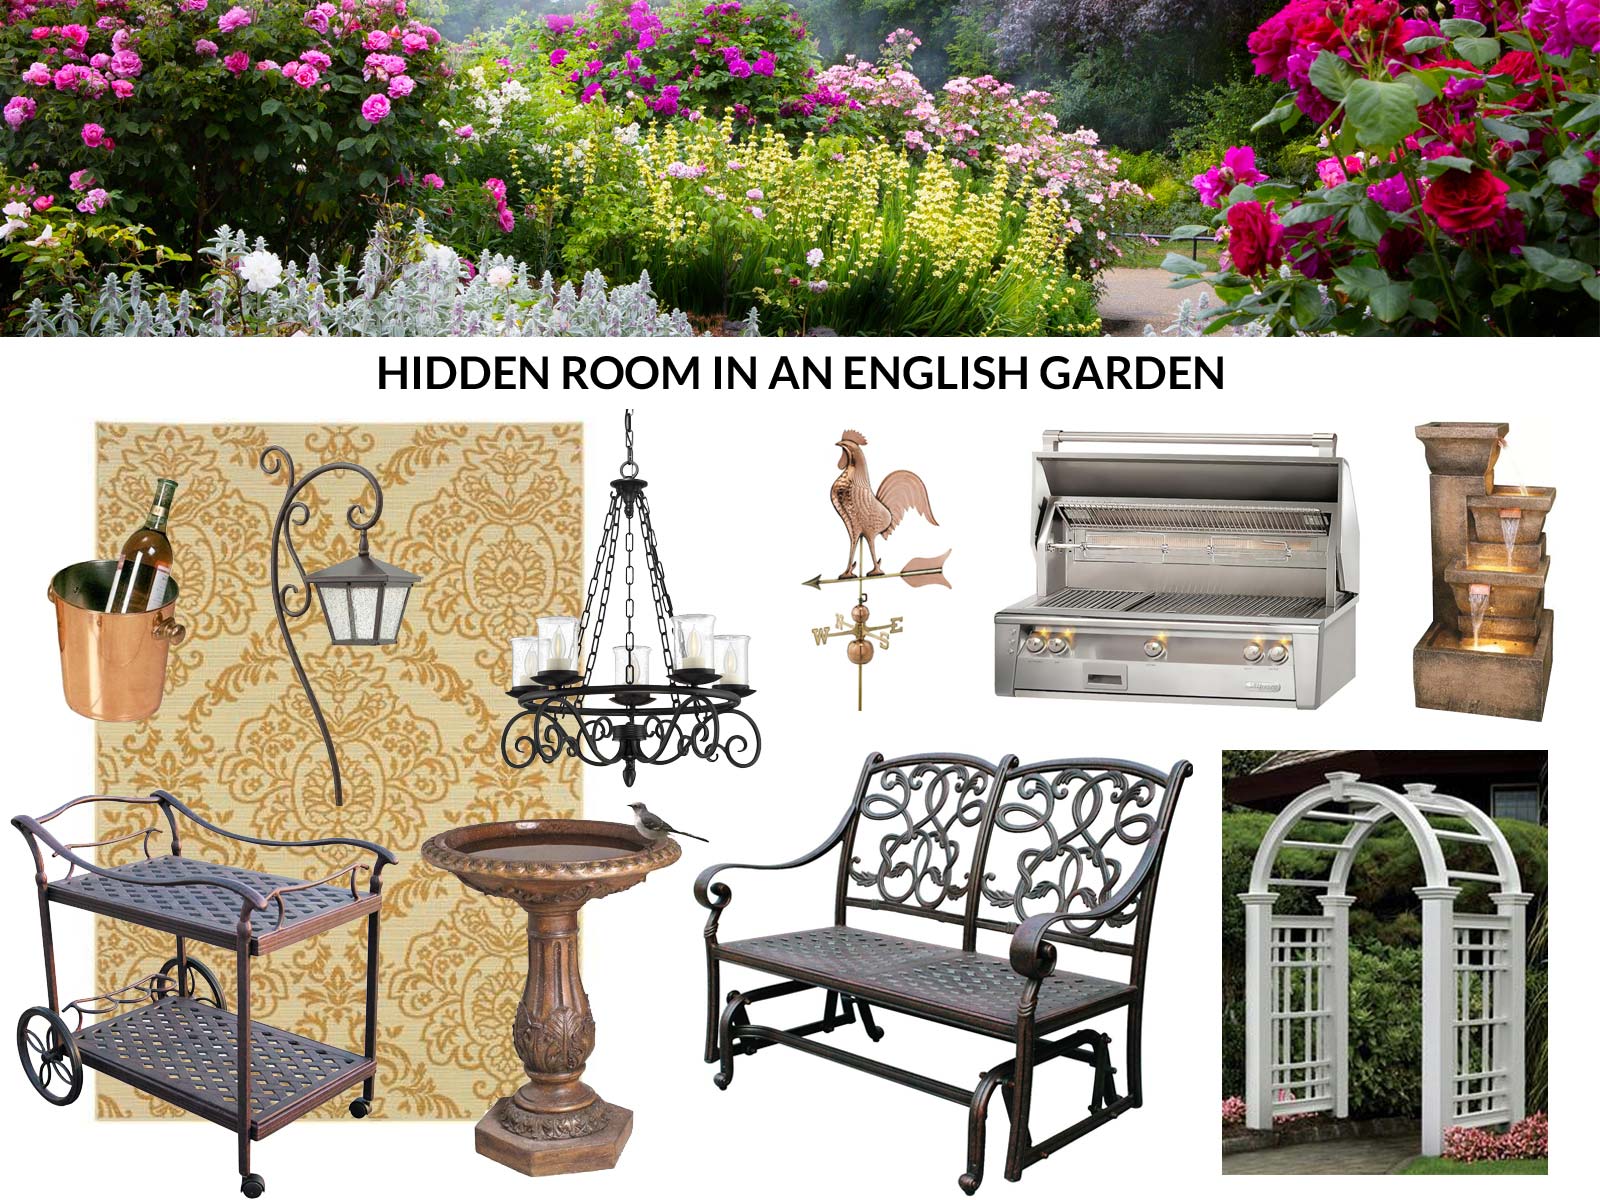 Hidden Room in an English Garden